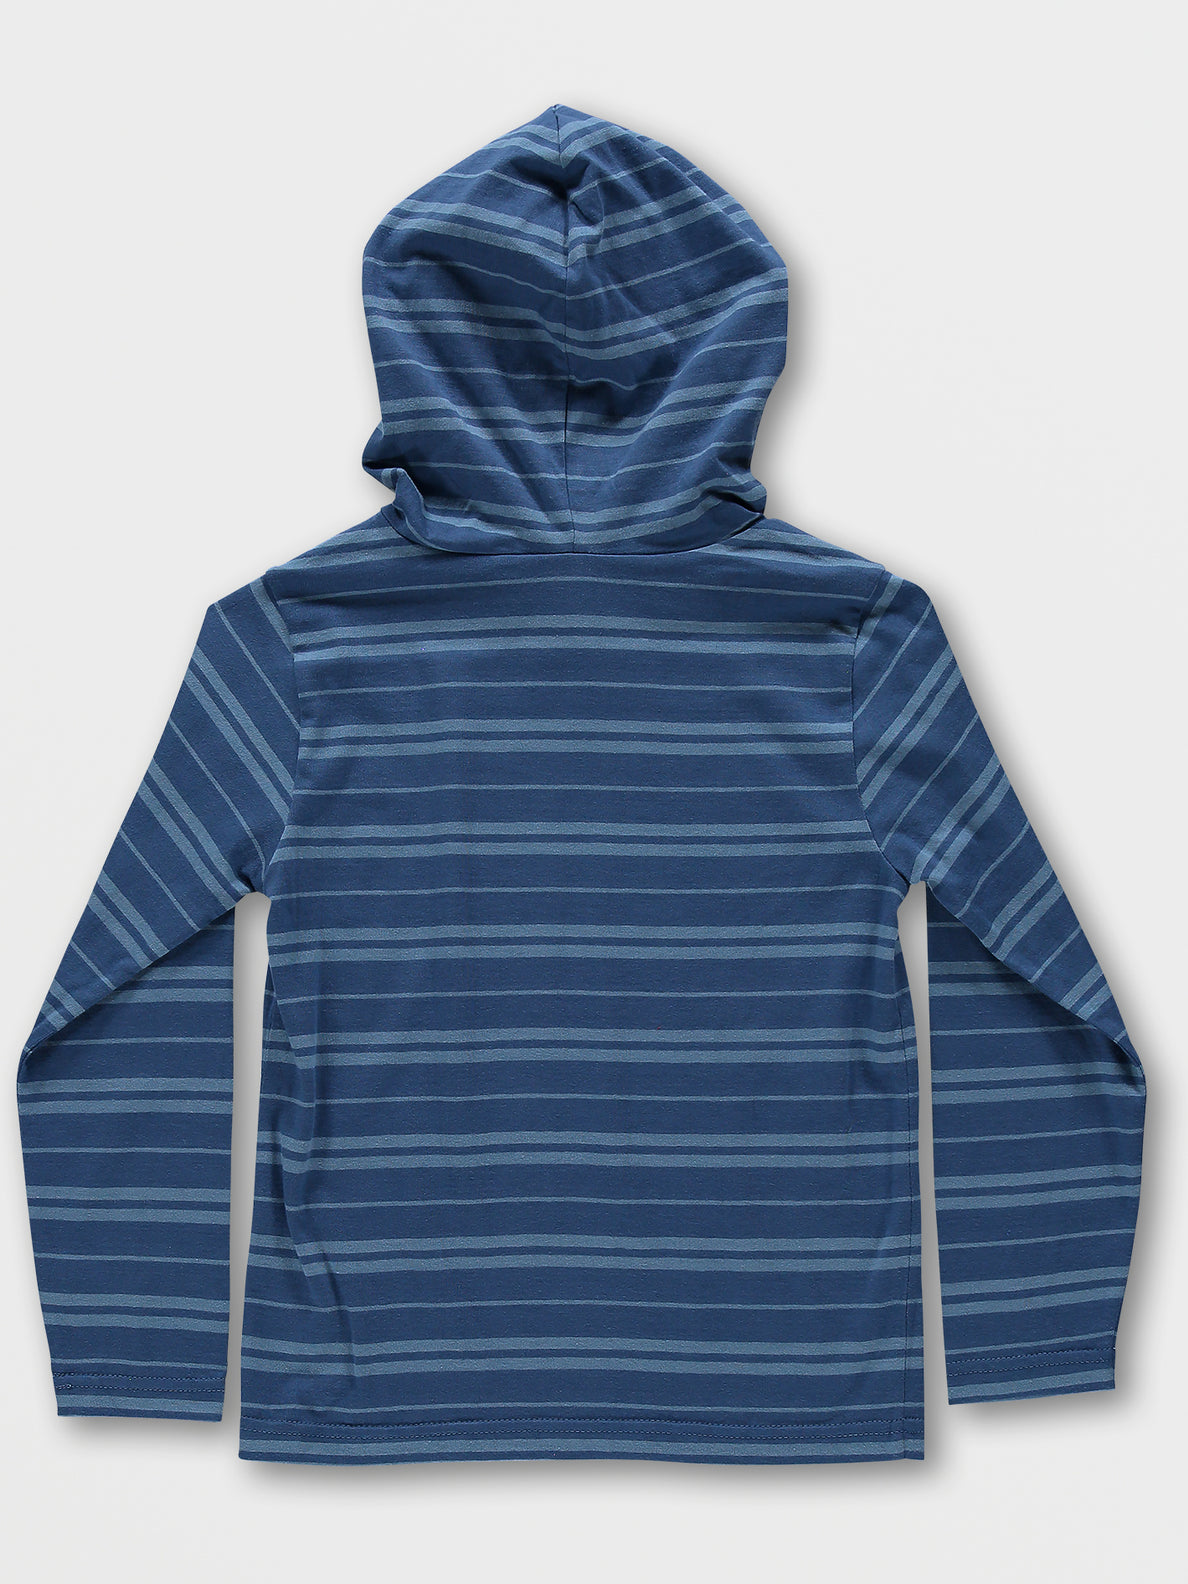 Little Boys Parables Striped Hooded Shirt - Wrecked Indigo